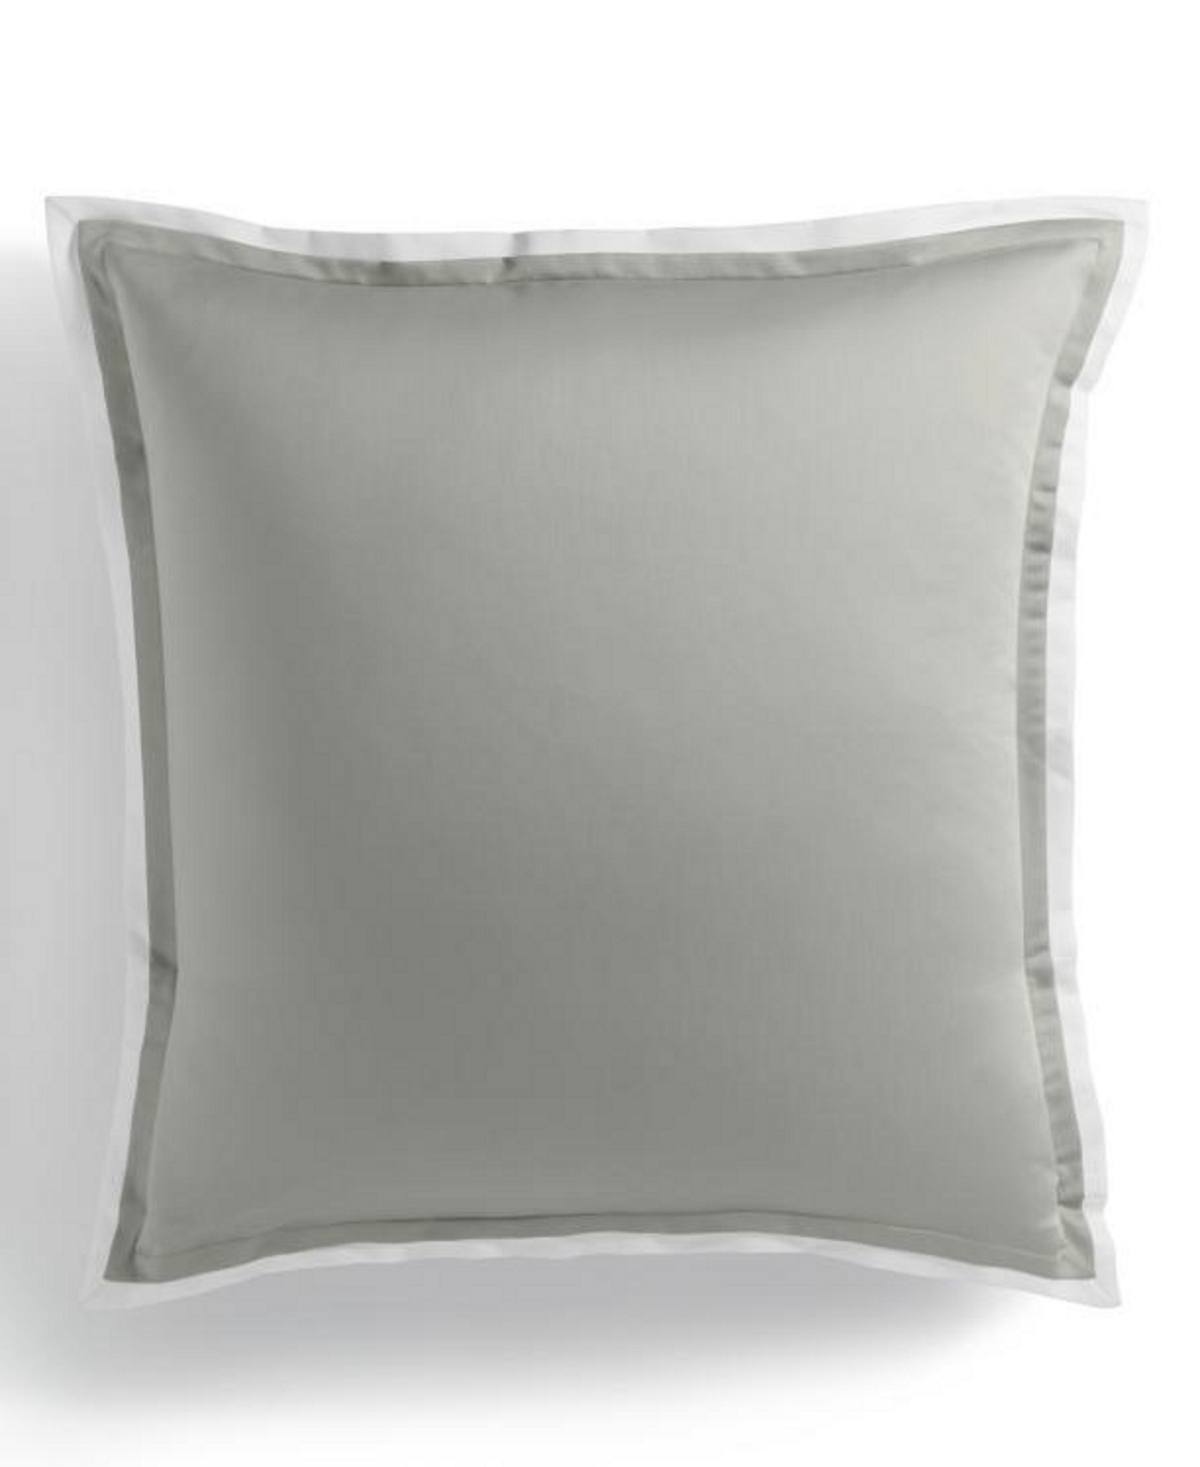 Sleep Luxe 800 Thread Count 100% Cotton Sham, European, Created for Macy's - White